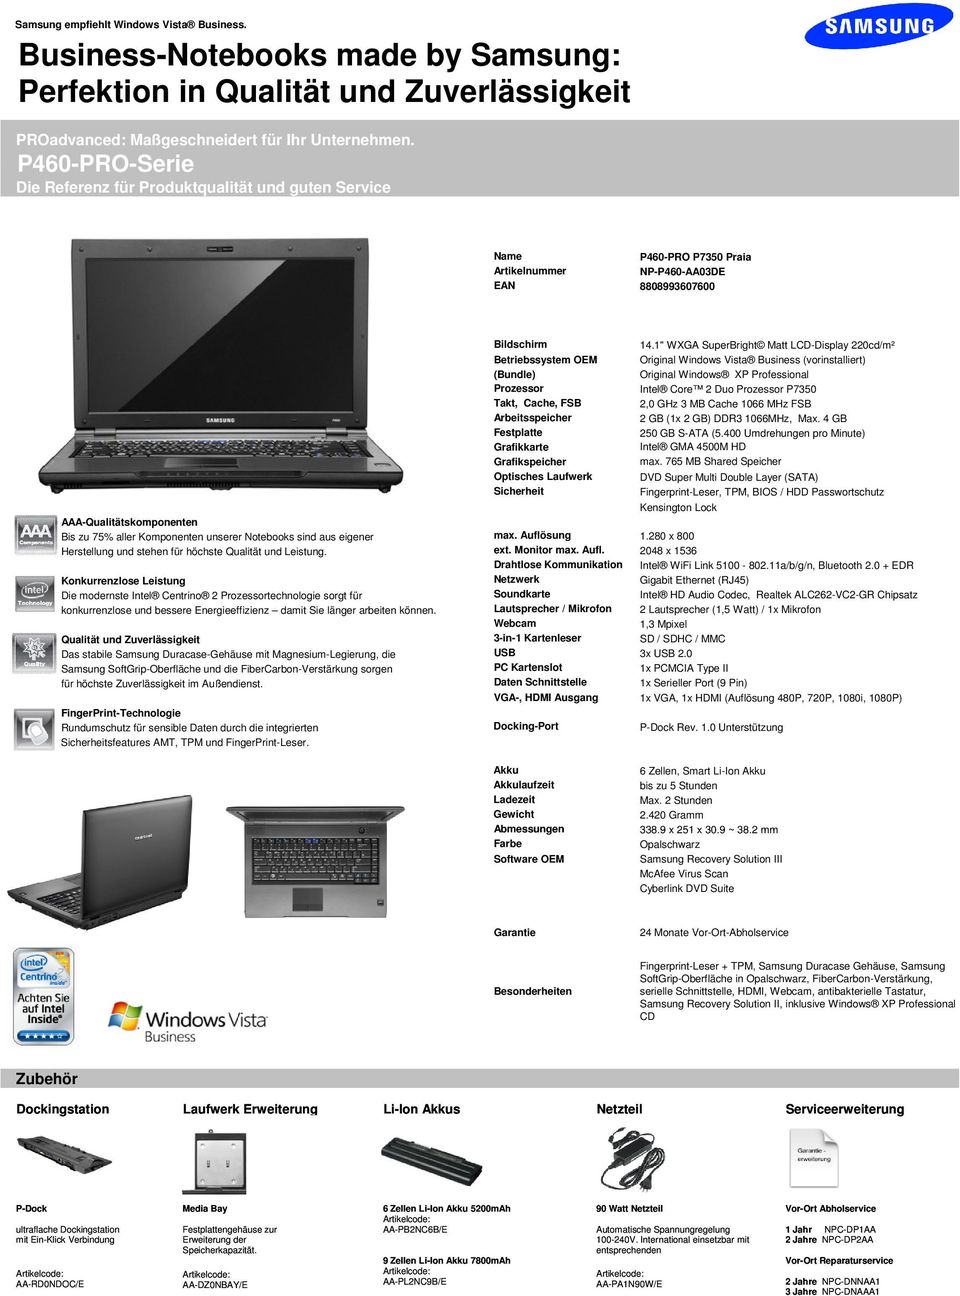 1" WXGA SuperBright Matt LCD-Display 220cd/m² Original Windows Vista Business (vorinstalliert) Original Windows XP Professional Intel Core 2 Duo P7350 2,0 GHz 3 MB Cache 1066 MHz FSB 2 GB (1x 2 GB)